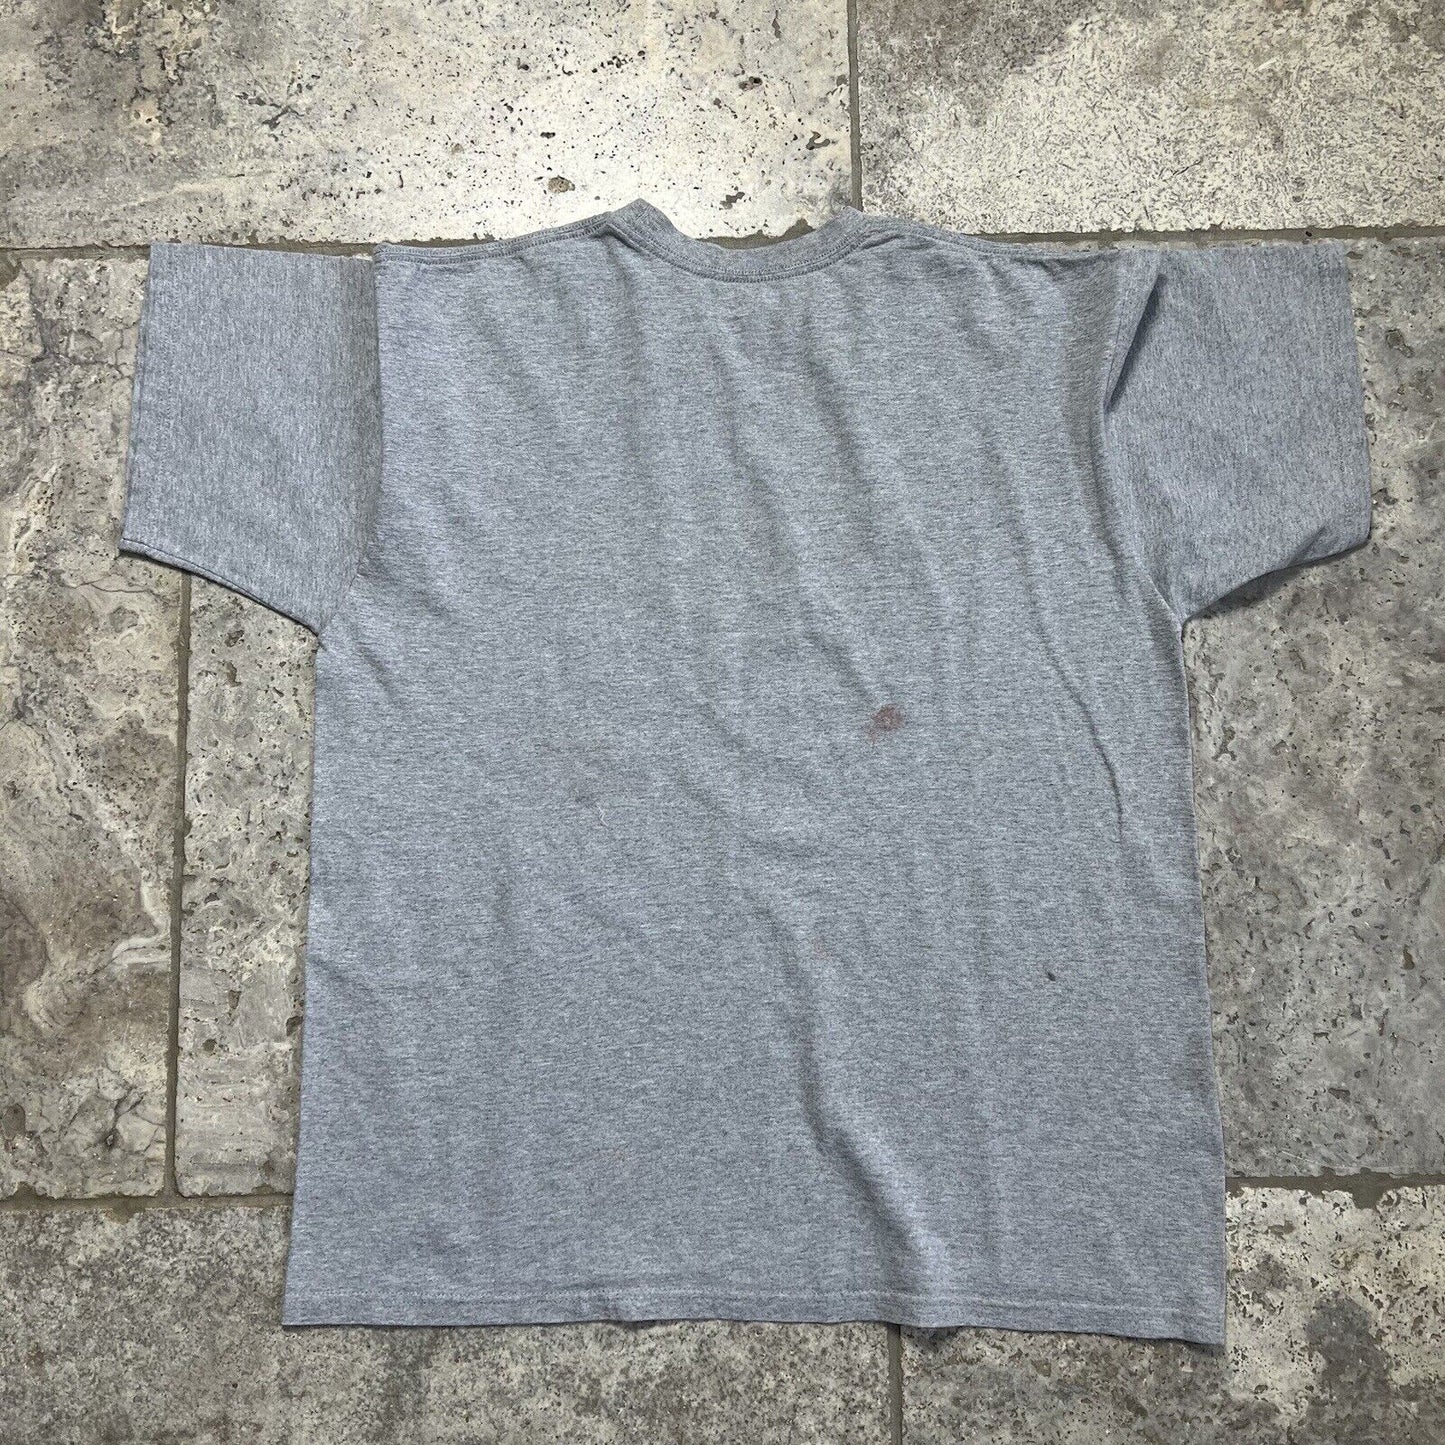 Nike Ohio State T Shirt 2010, Men’s, Large